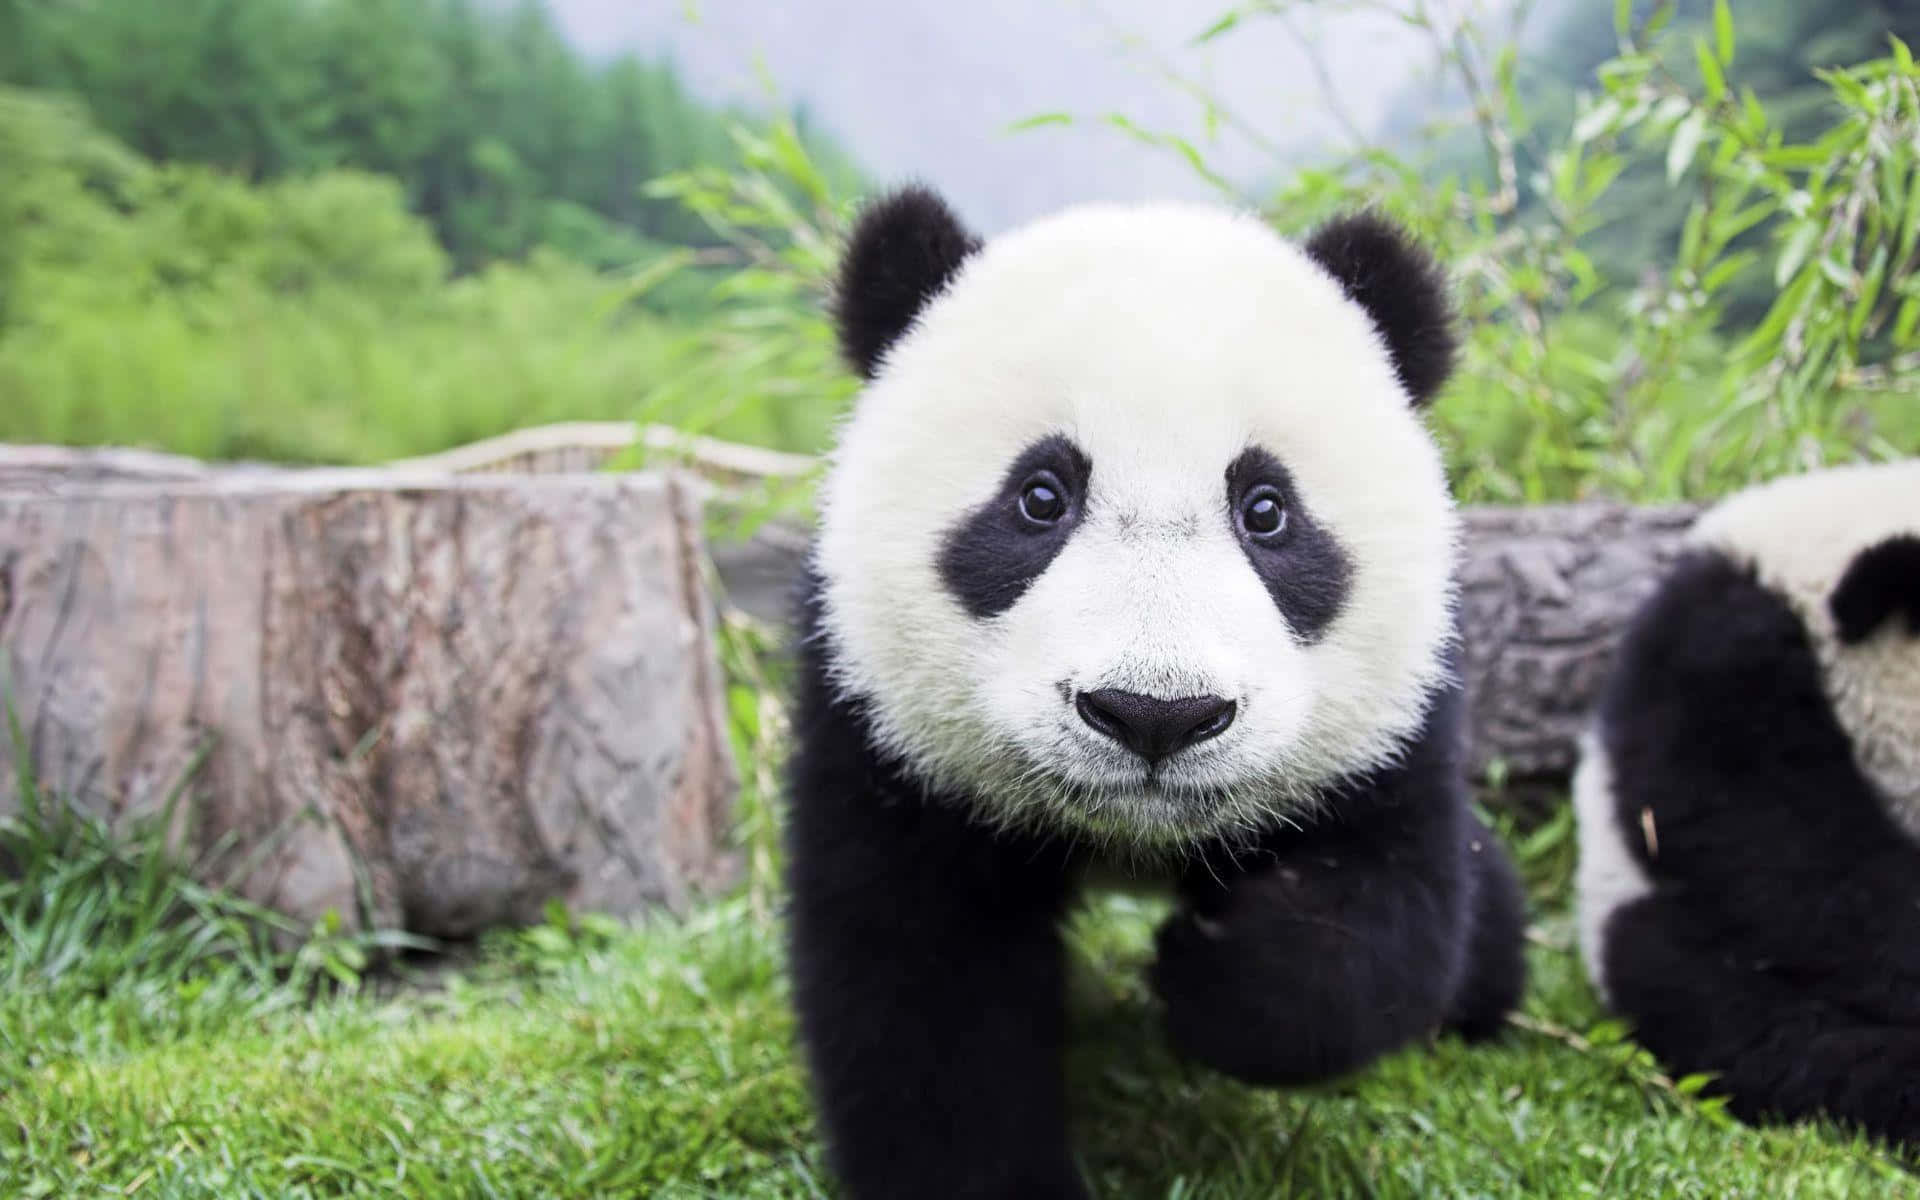 Adorable Panda Enjoys Time in Nature